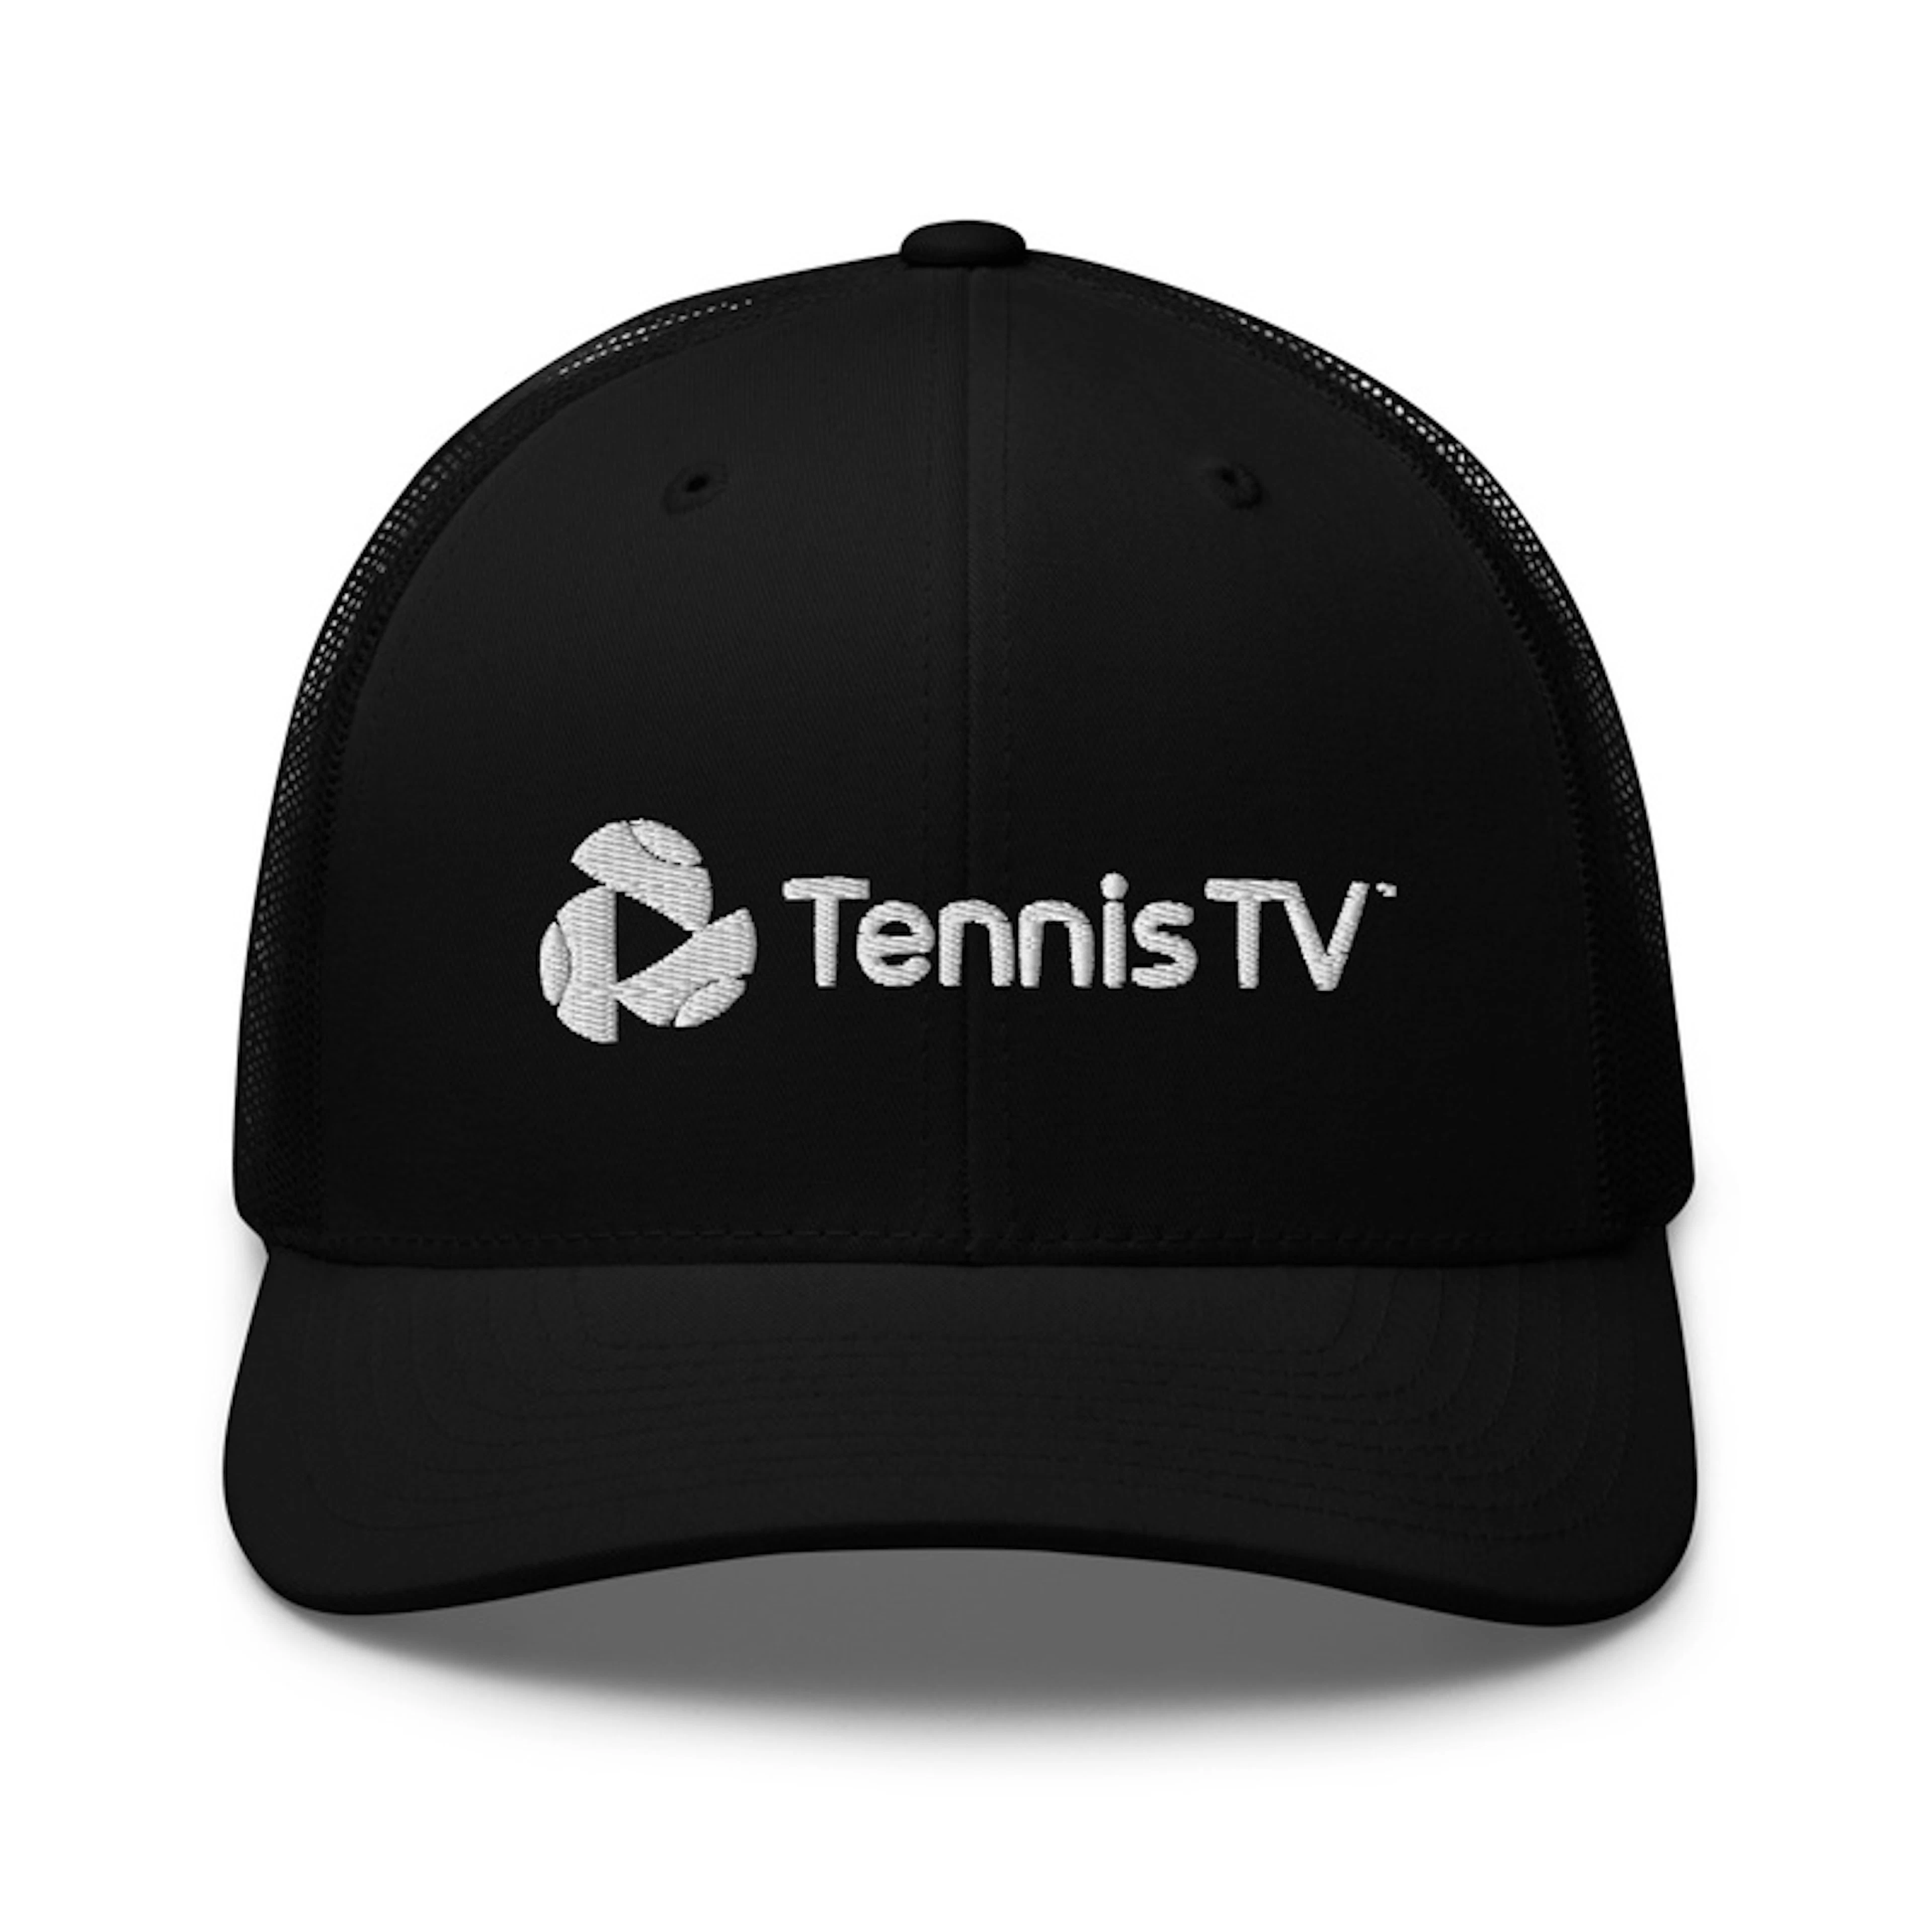 Tennis TV Trucker Logo Cap - Black